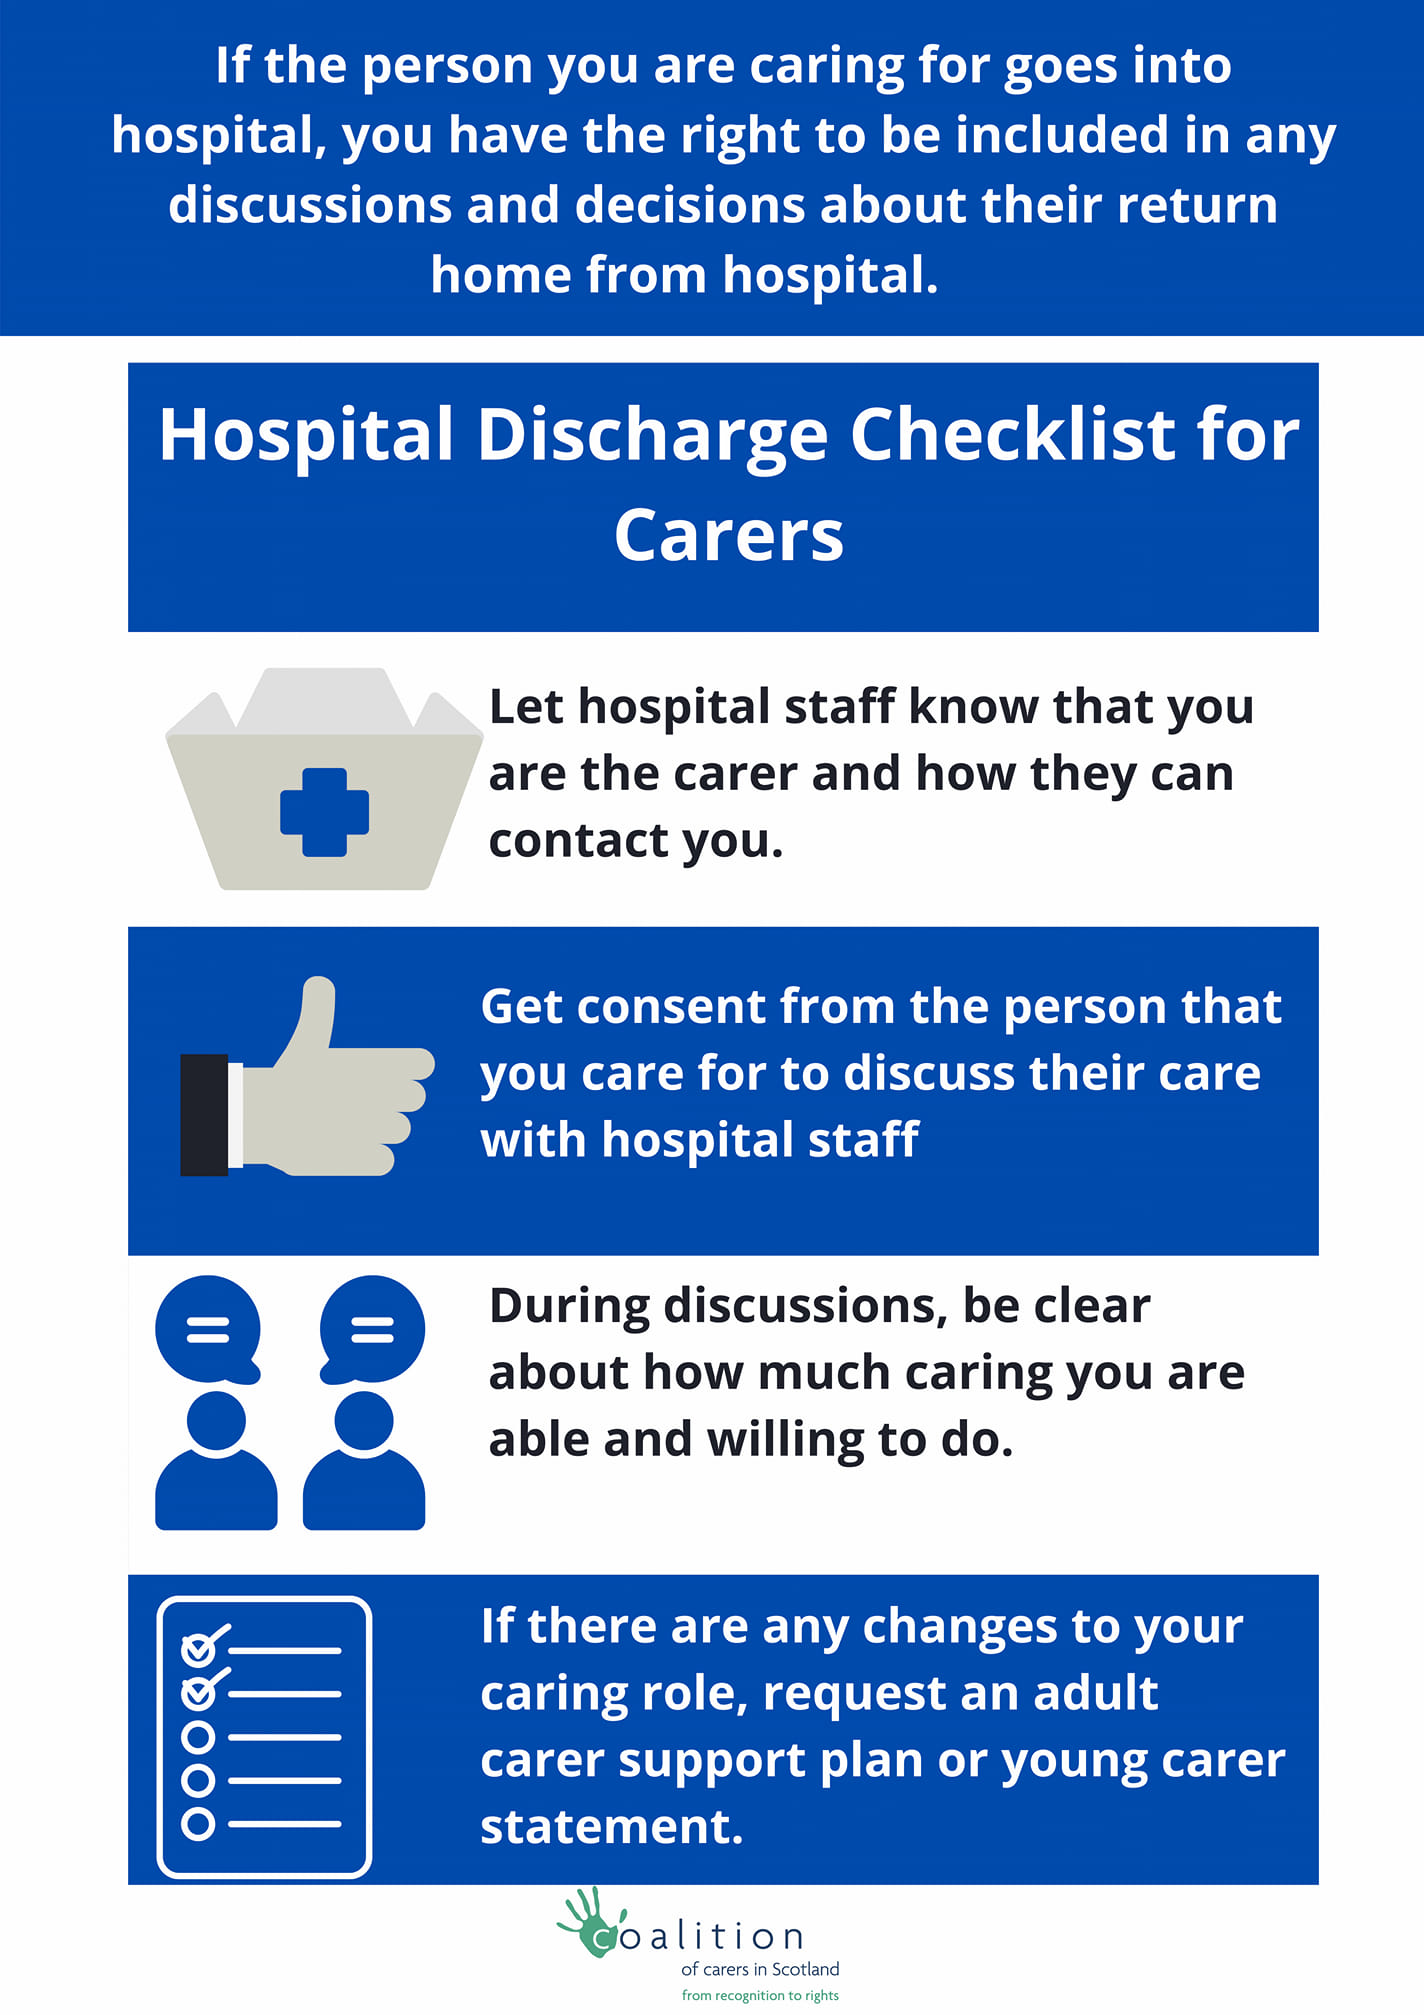 Unpaid Carers Scotland - Hospital Discharge Checklist